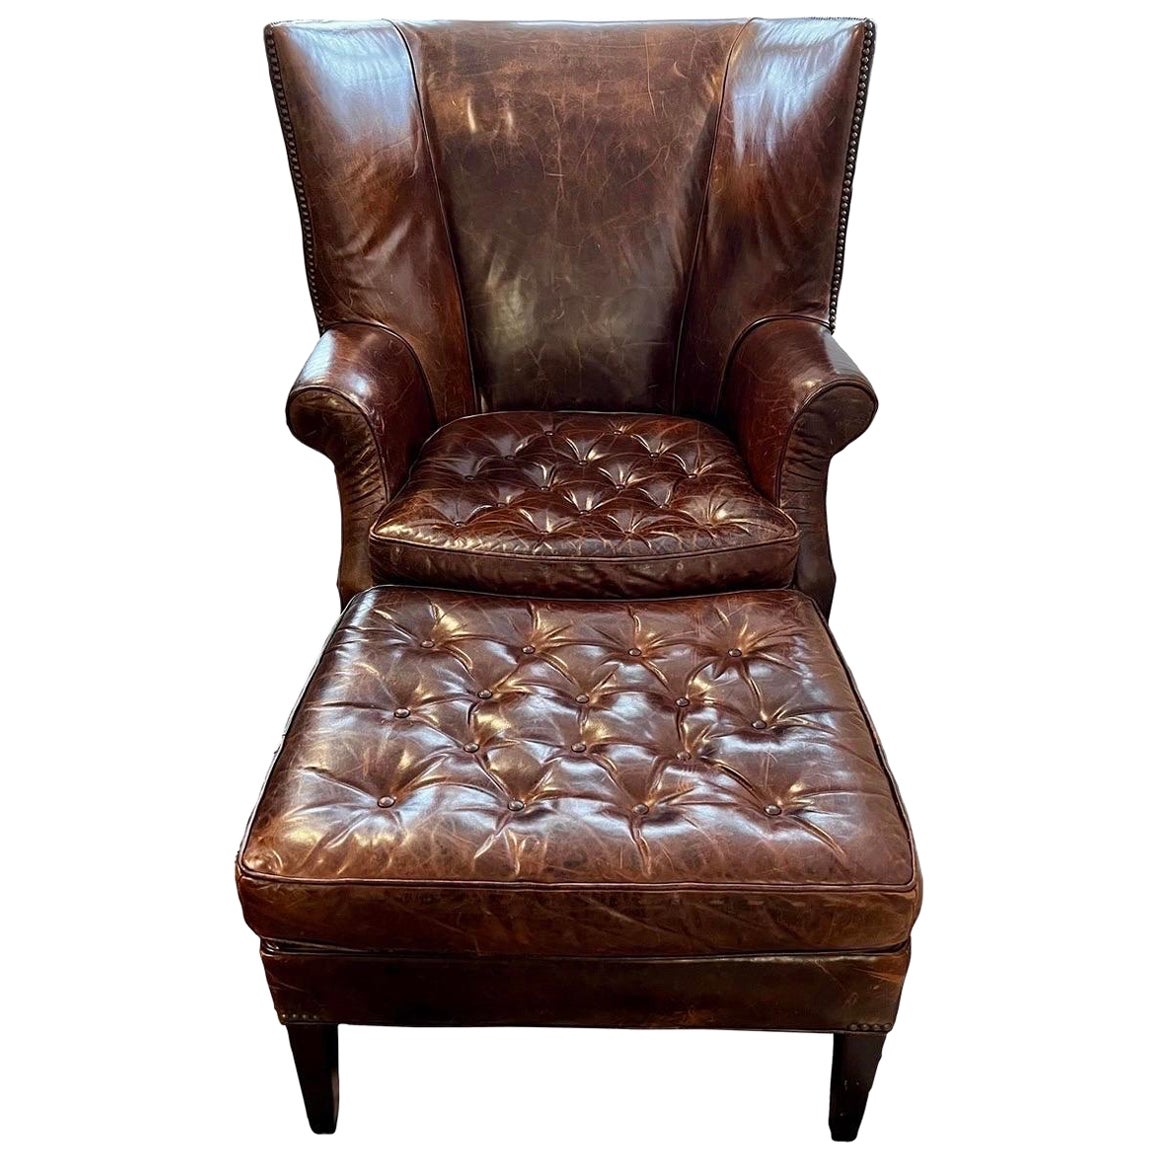  Chaise à dossier en cuir Chesterfield brun vieilli et pouf assorti